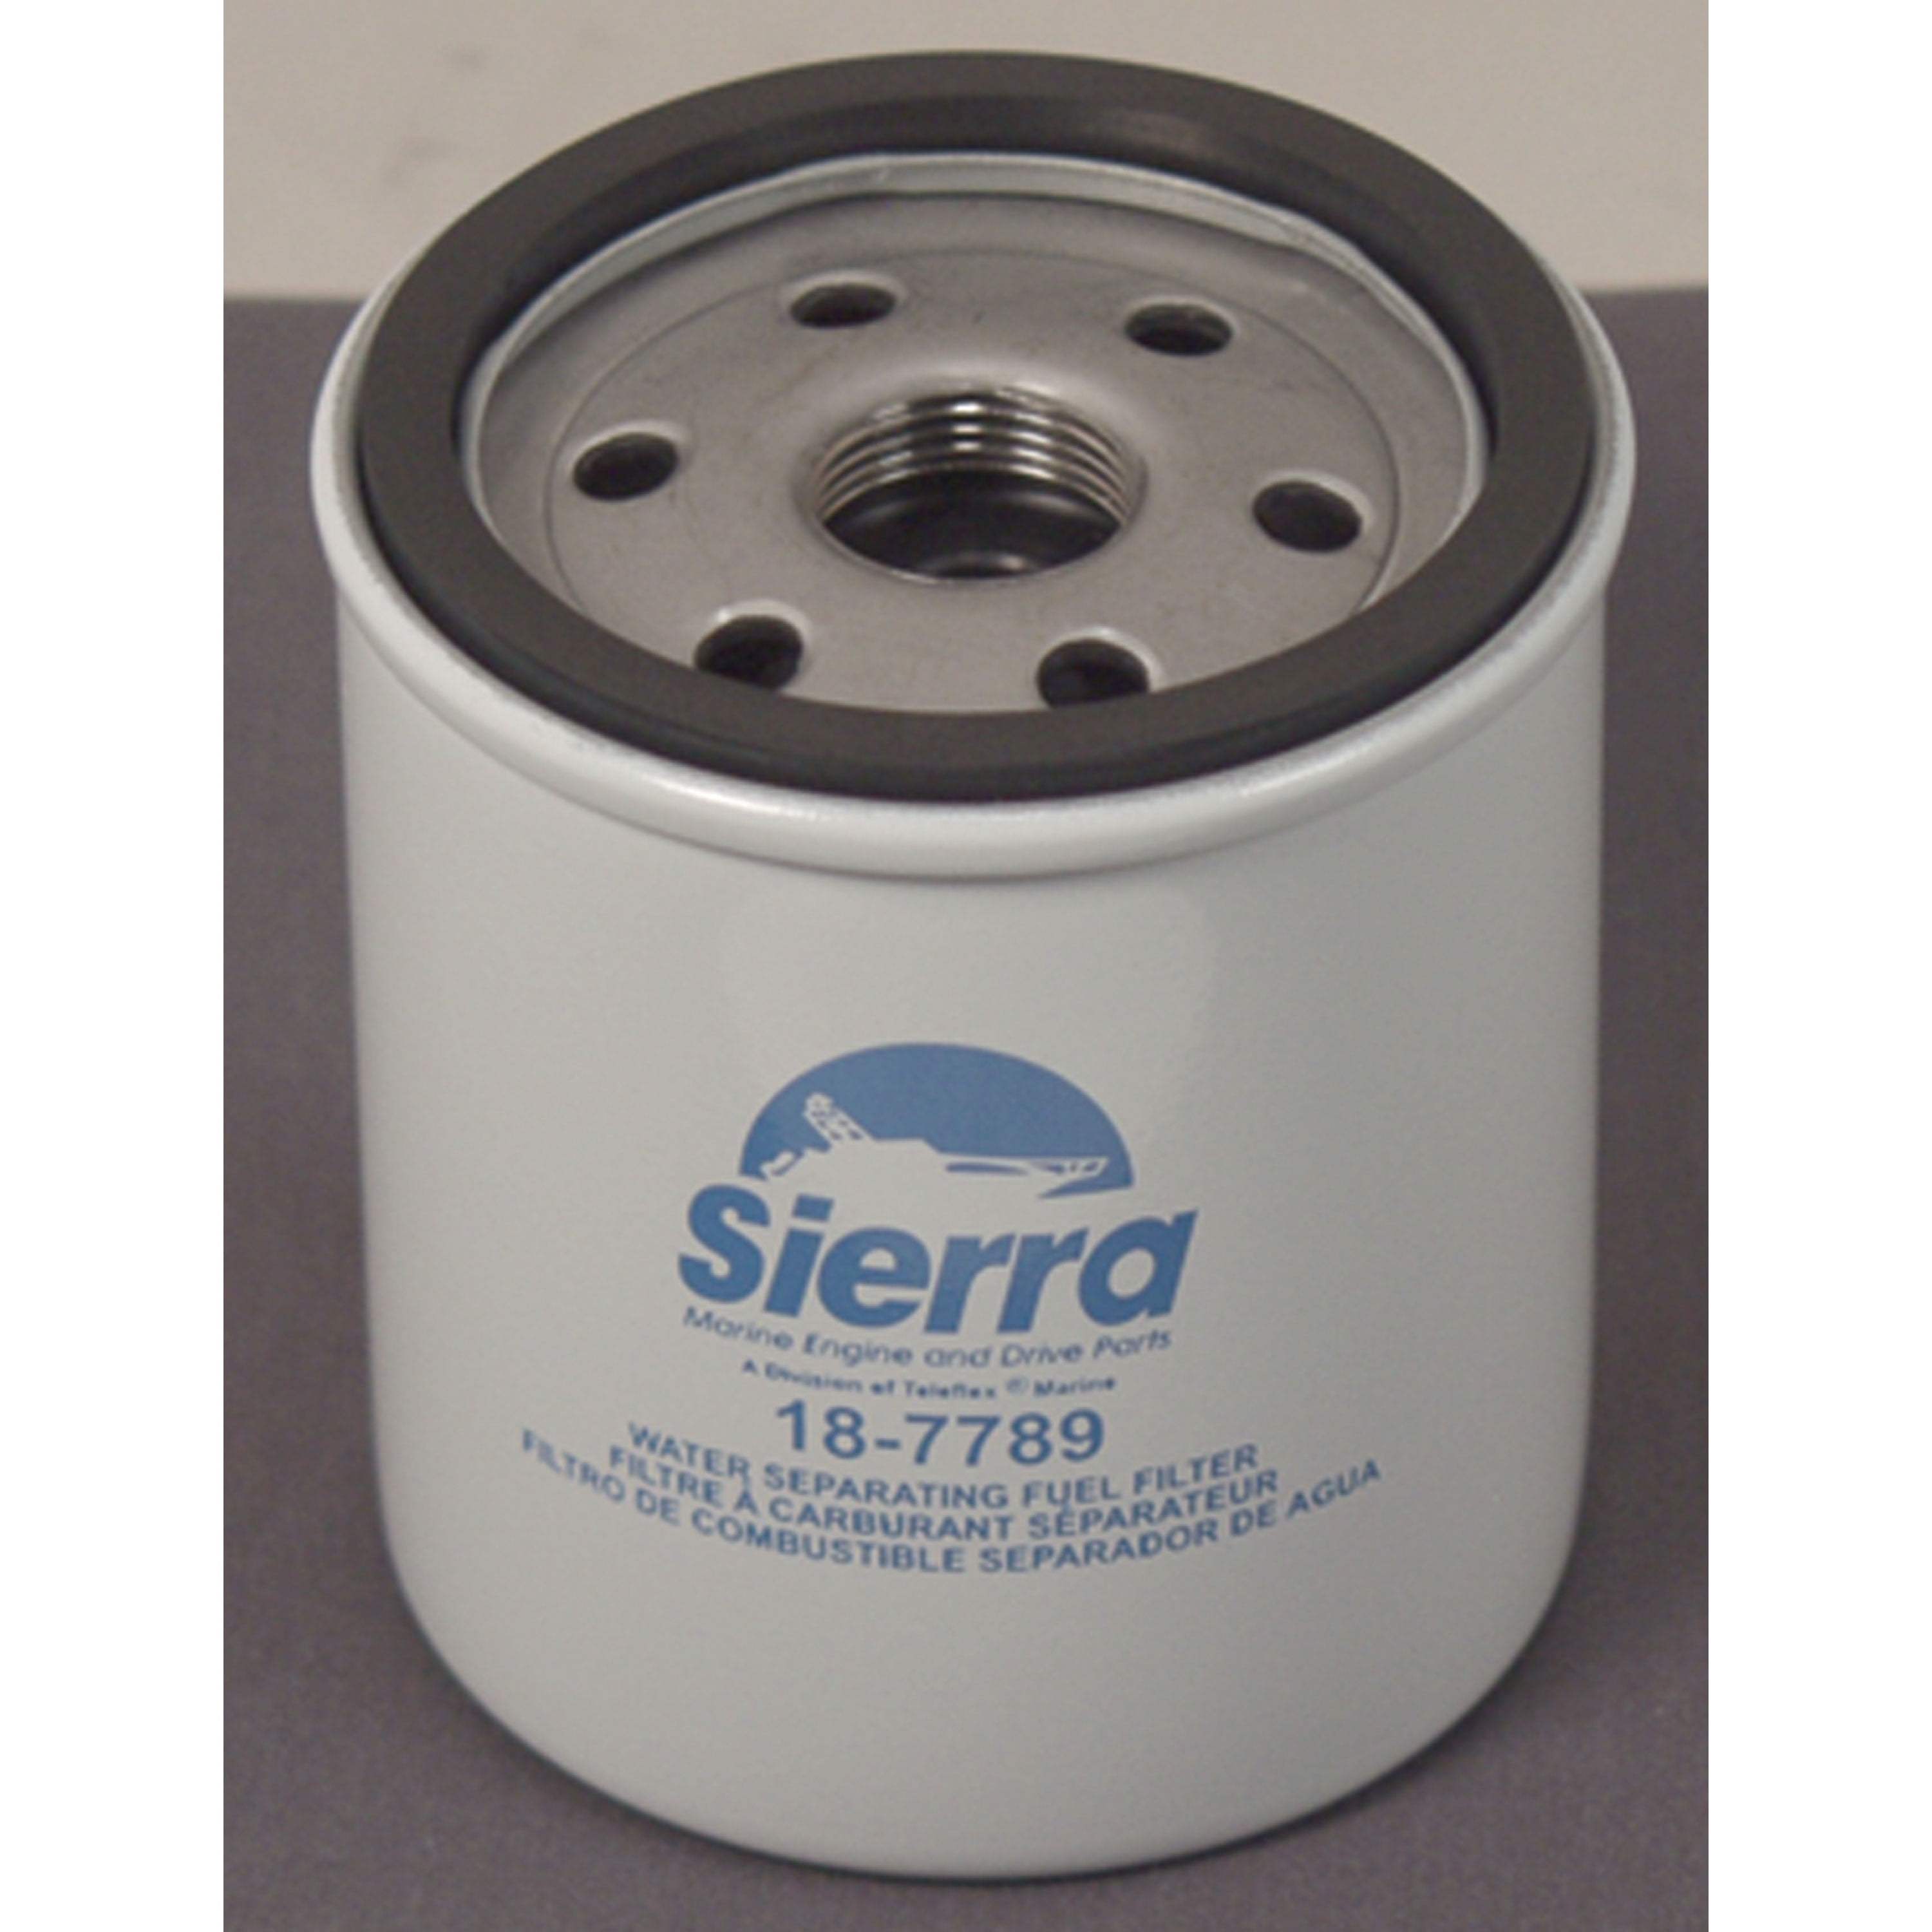 Sierra International 18-7989 Fuel Water Separator Filter 808282201883 for sale online 